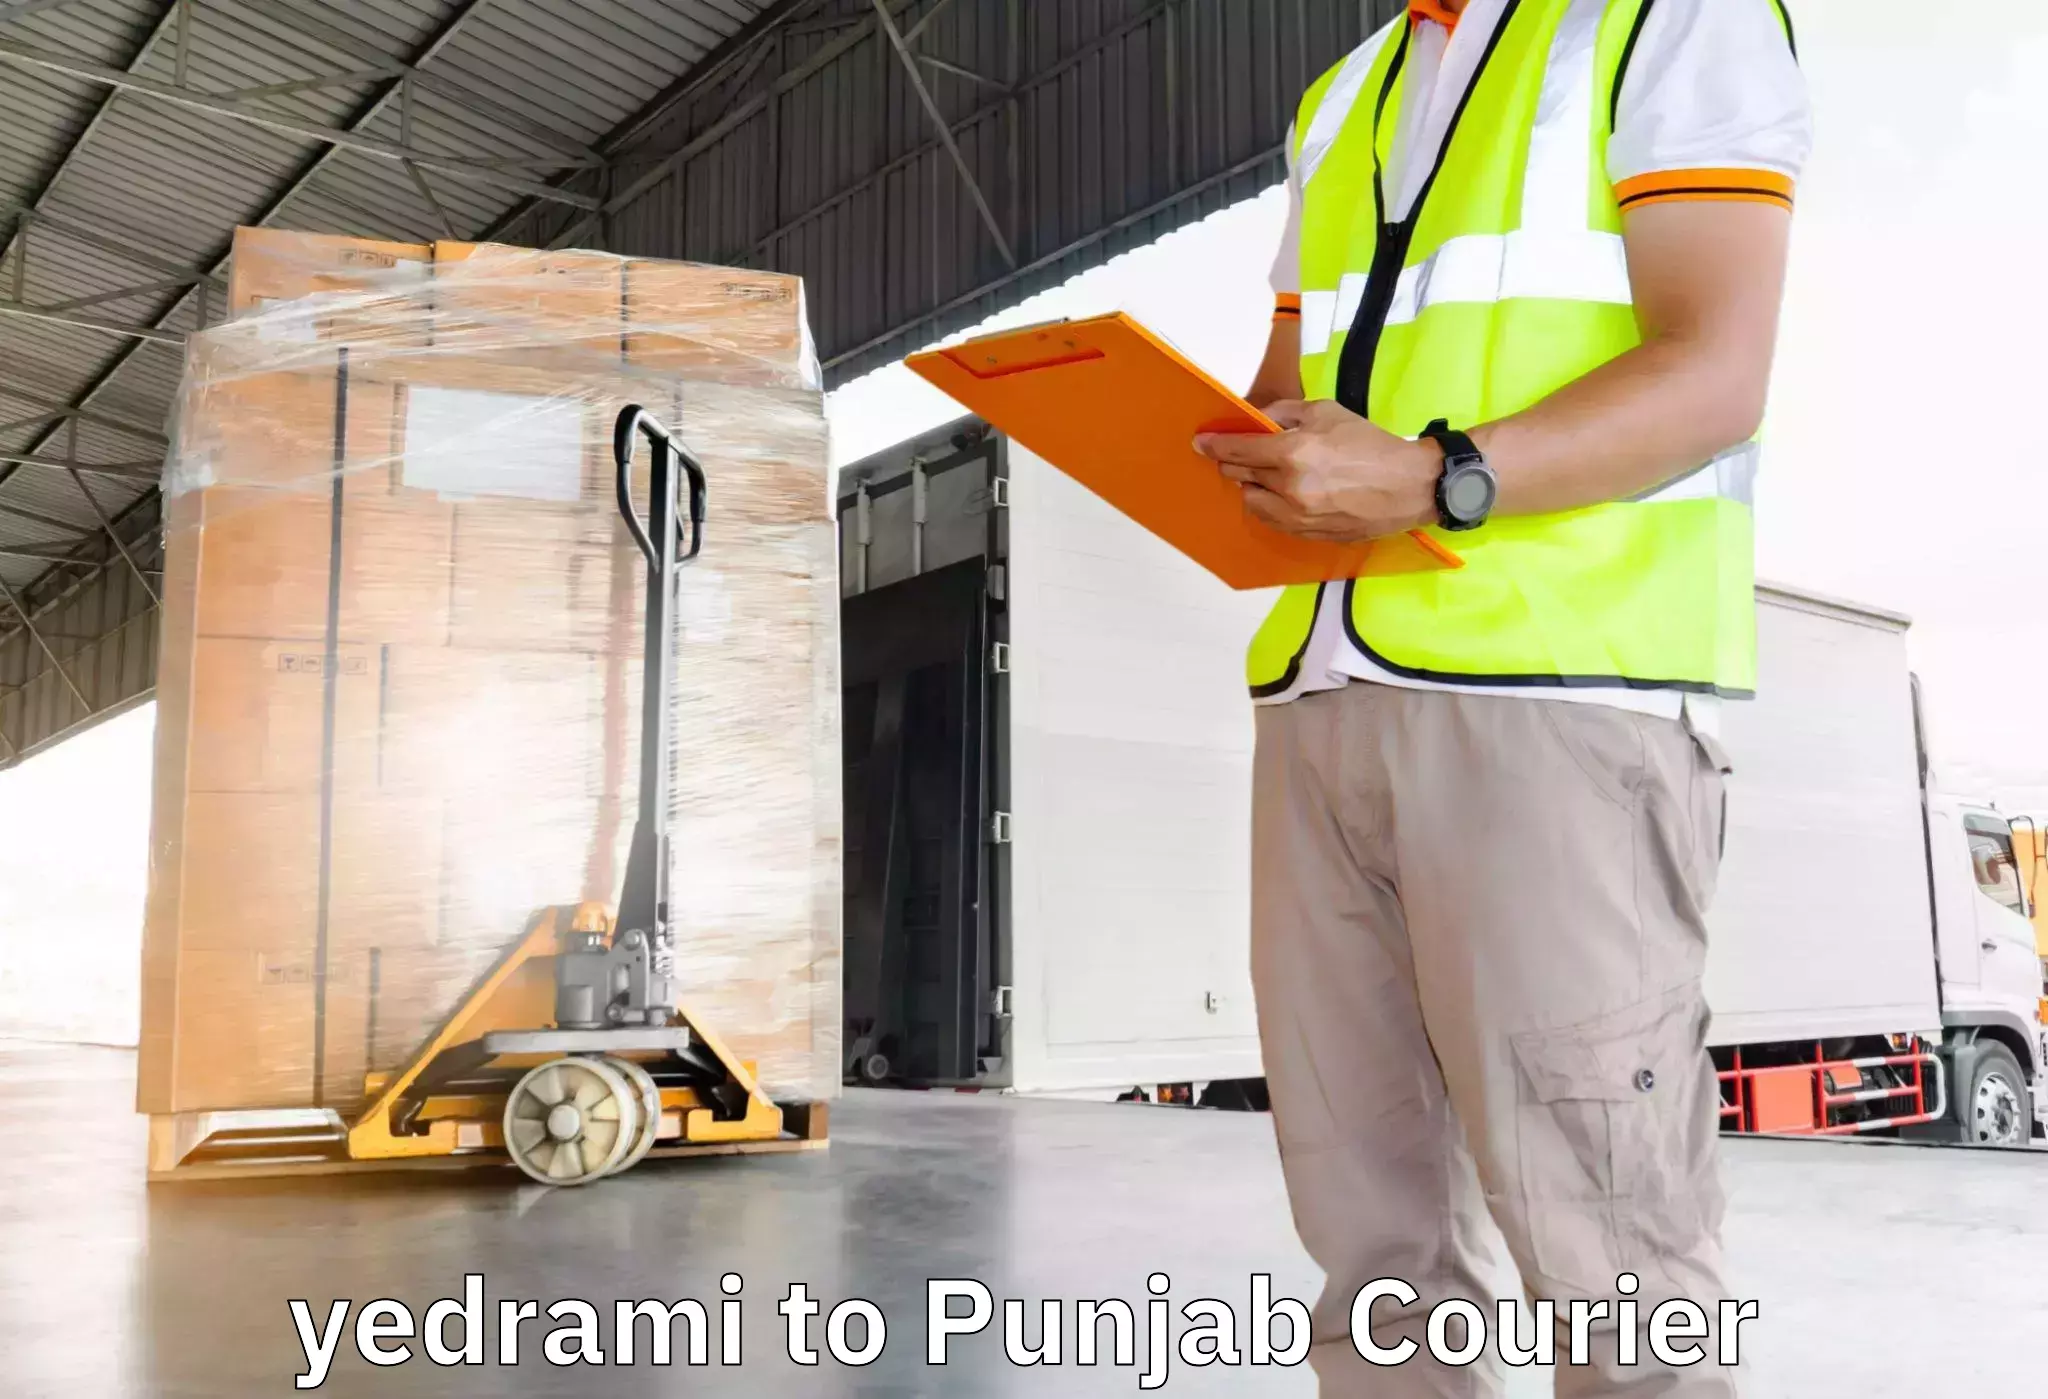 Efficient moving company yedrami to Dhuri